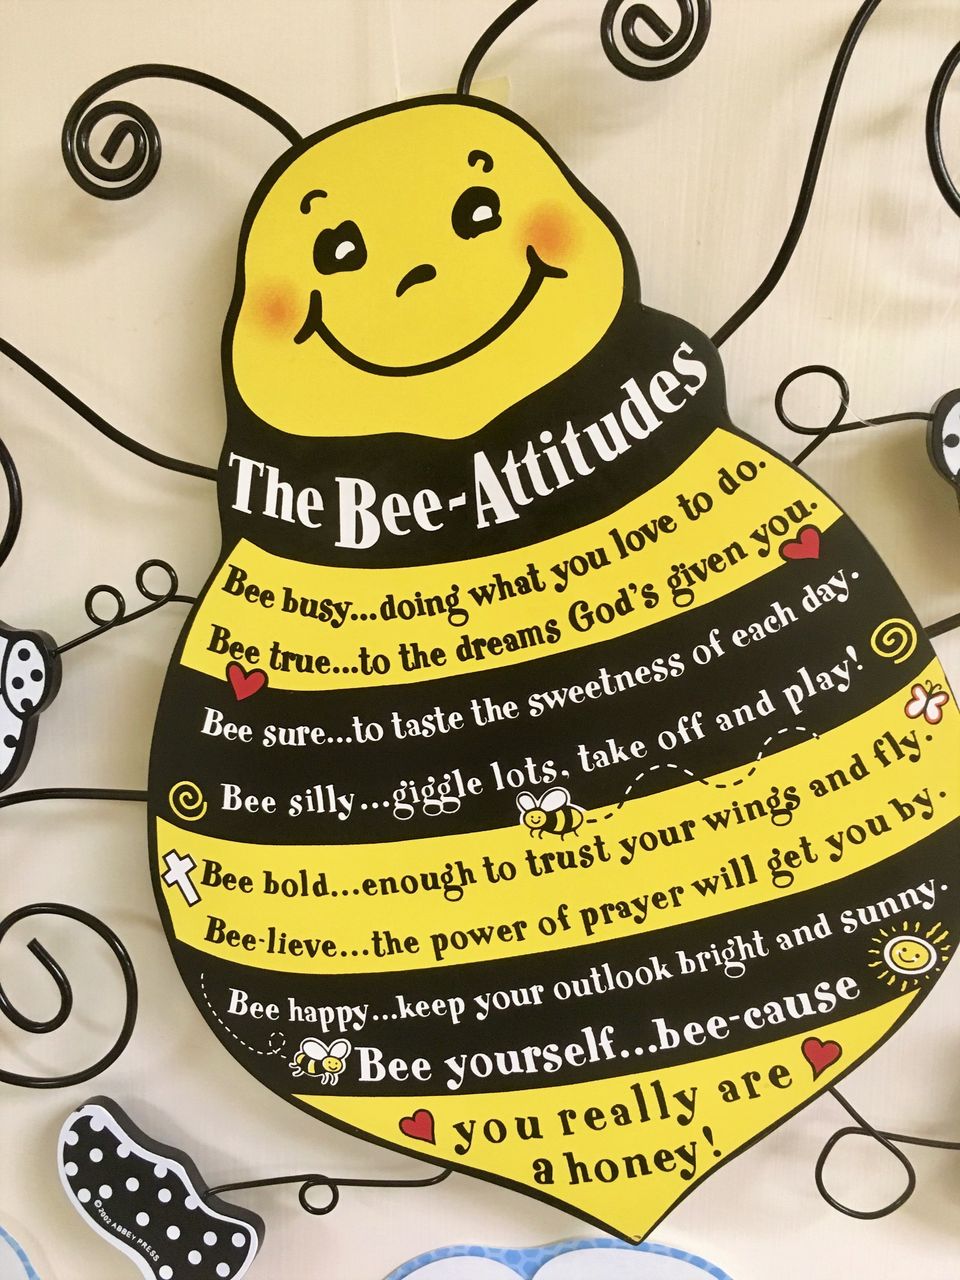 Bee attitudes